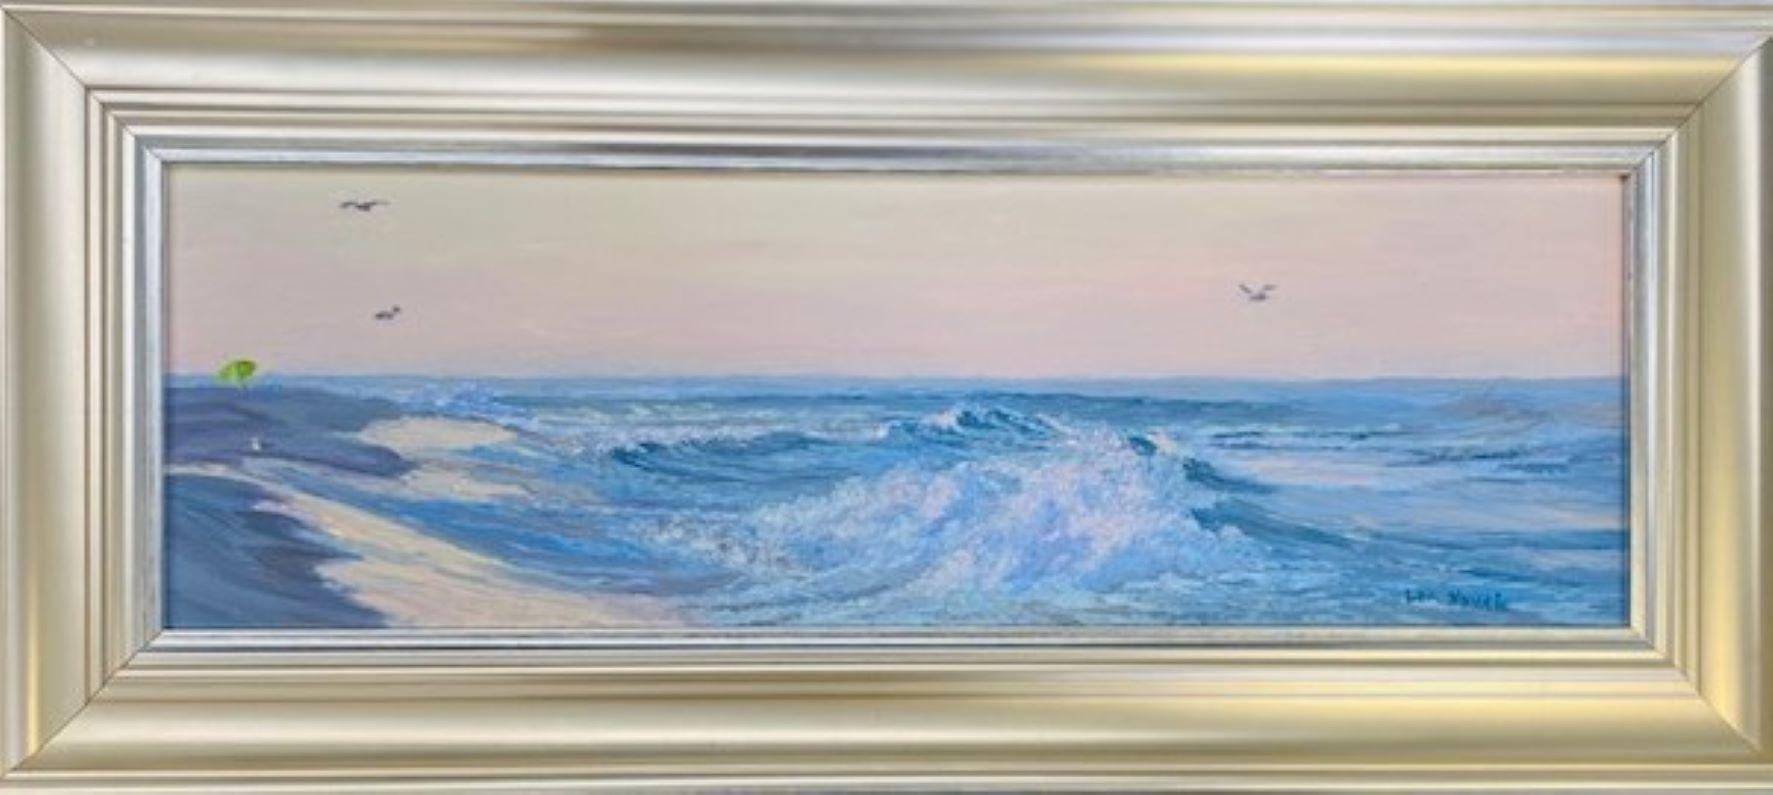 Lea Novak Landscape Painting - Twilight on the Beach, original contemporary marine landscape oil painting